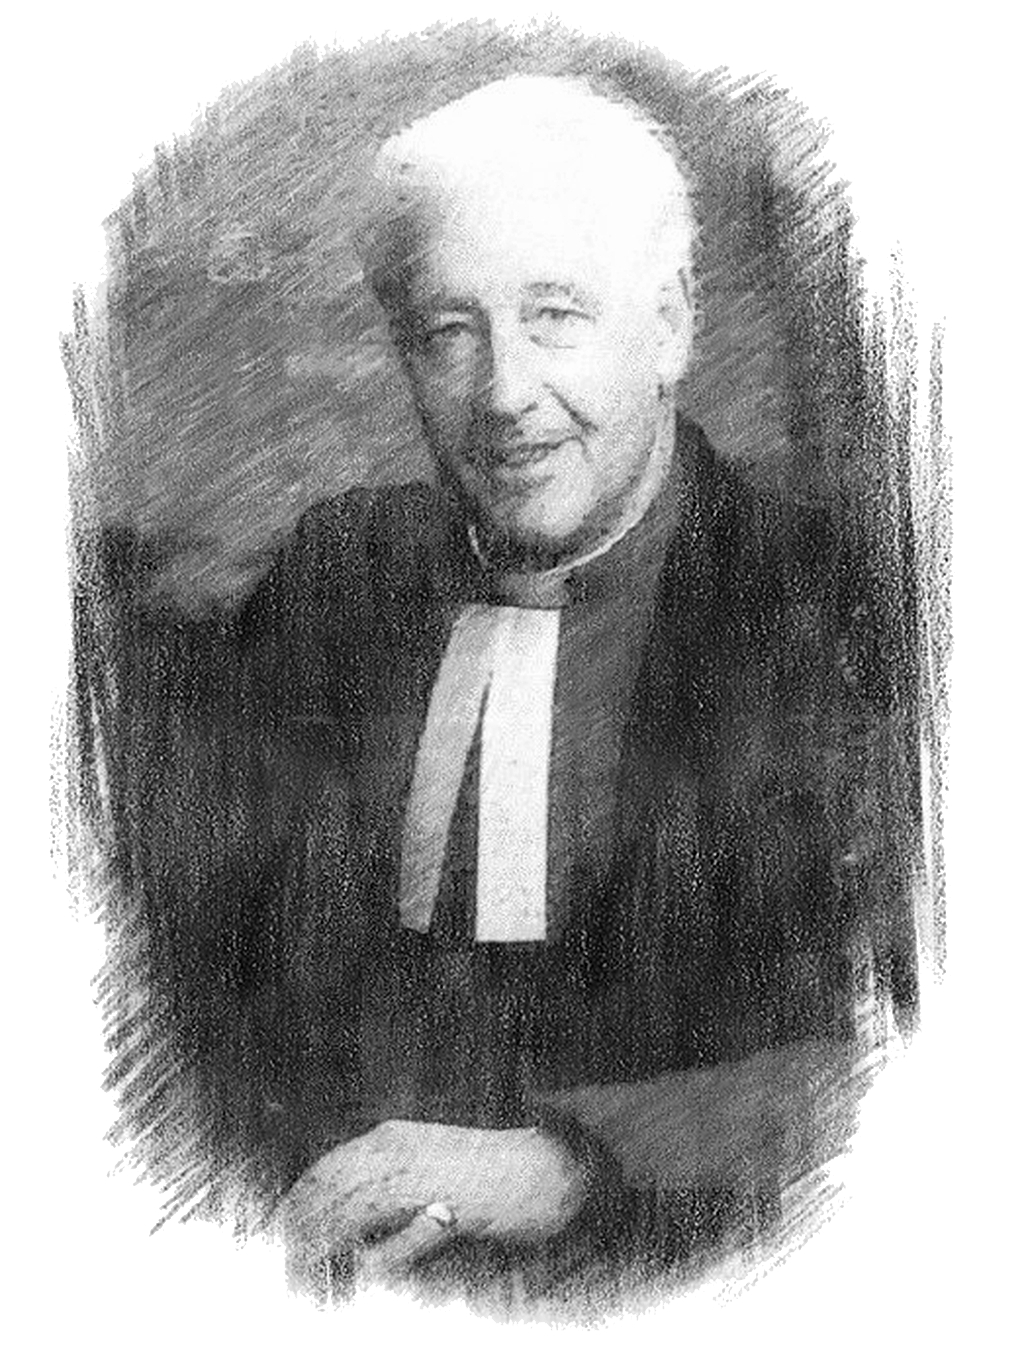 Rev Ian Uidhist MacDonald - Composed by John C Grant (https://johncgrant.com). Traditional composer from Kilmarnock, Ayrshire, Scotland.